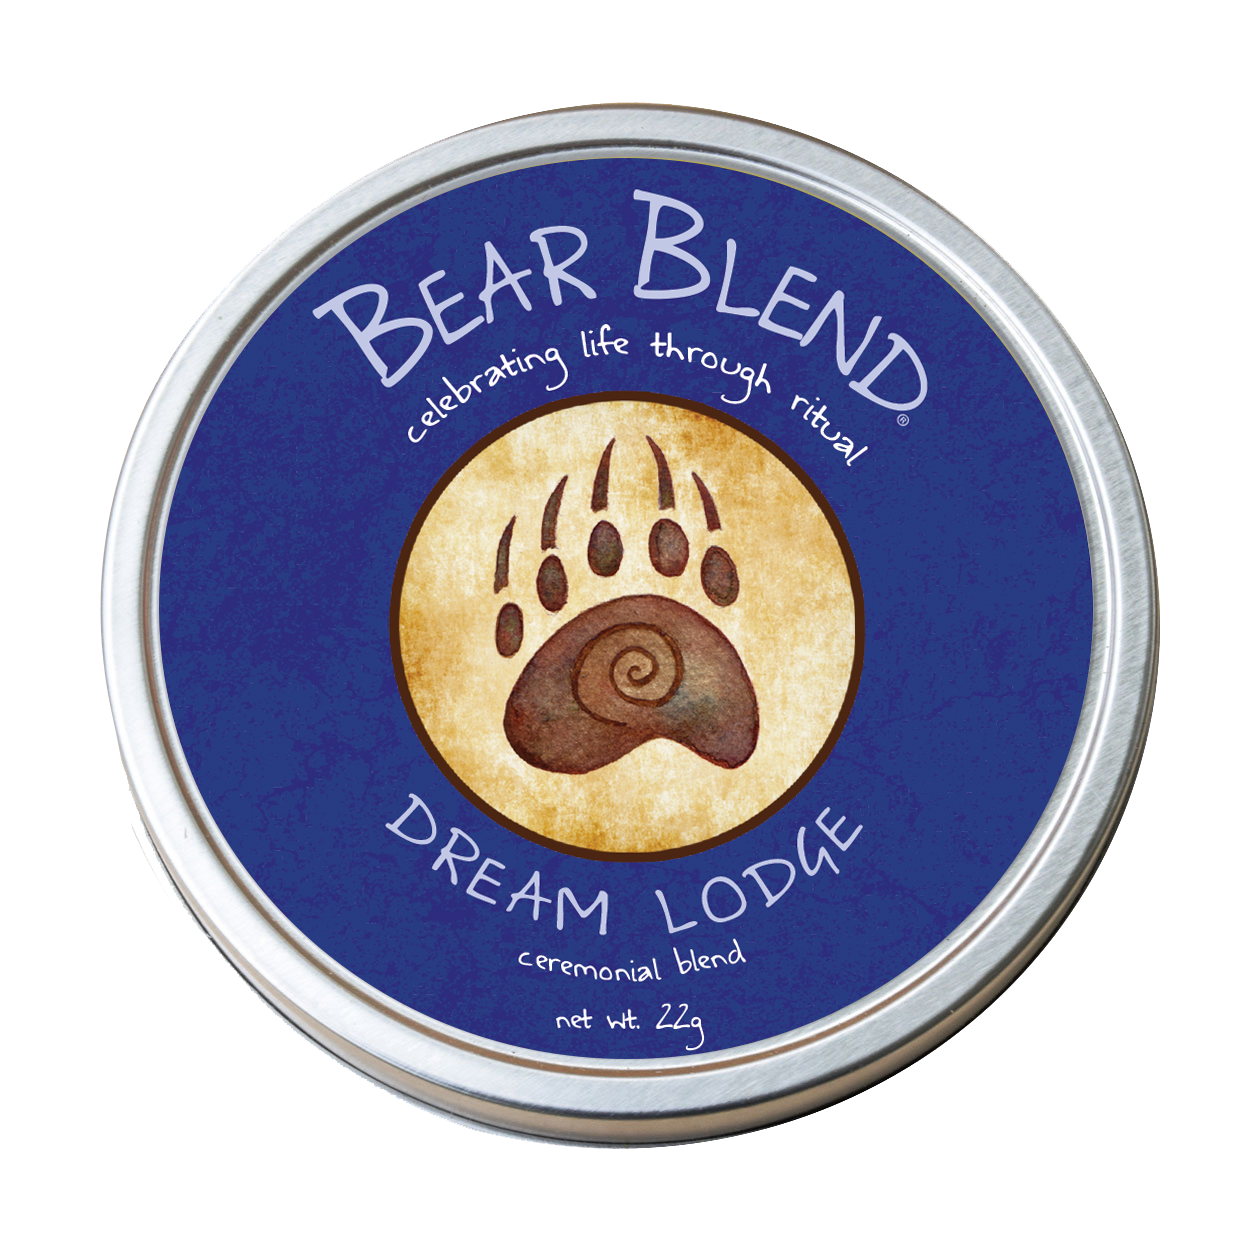 Dream Lodge Herbal Ceremonial Blend Bear Blend